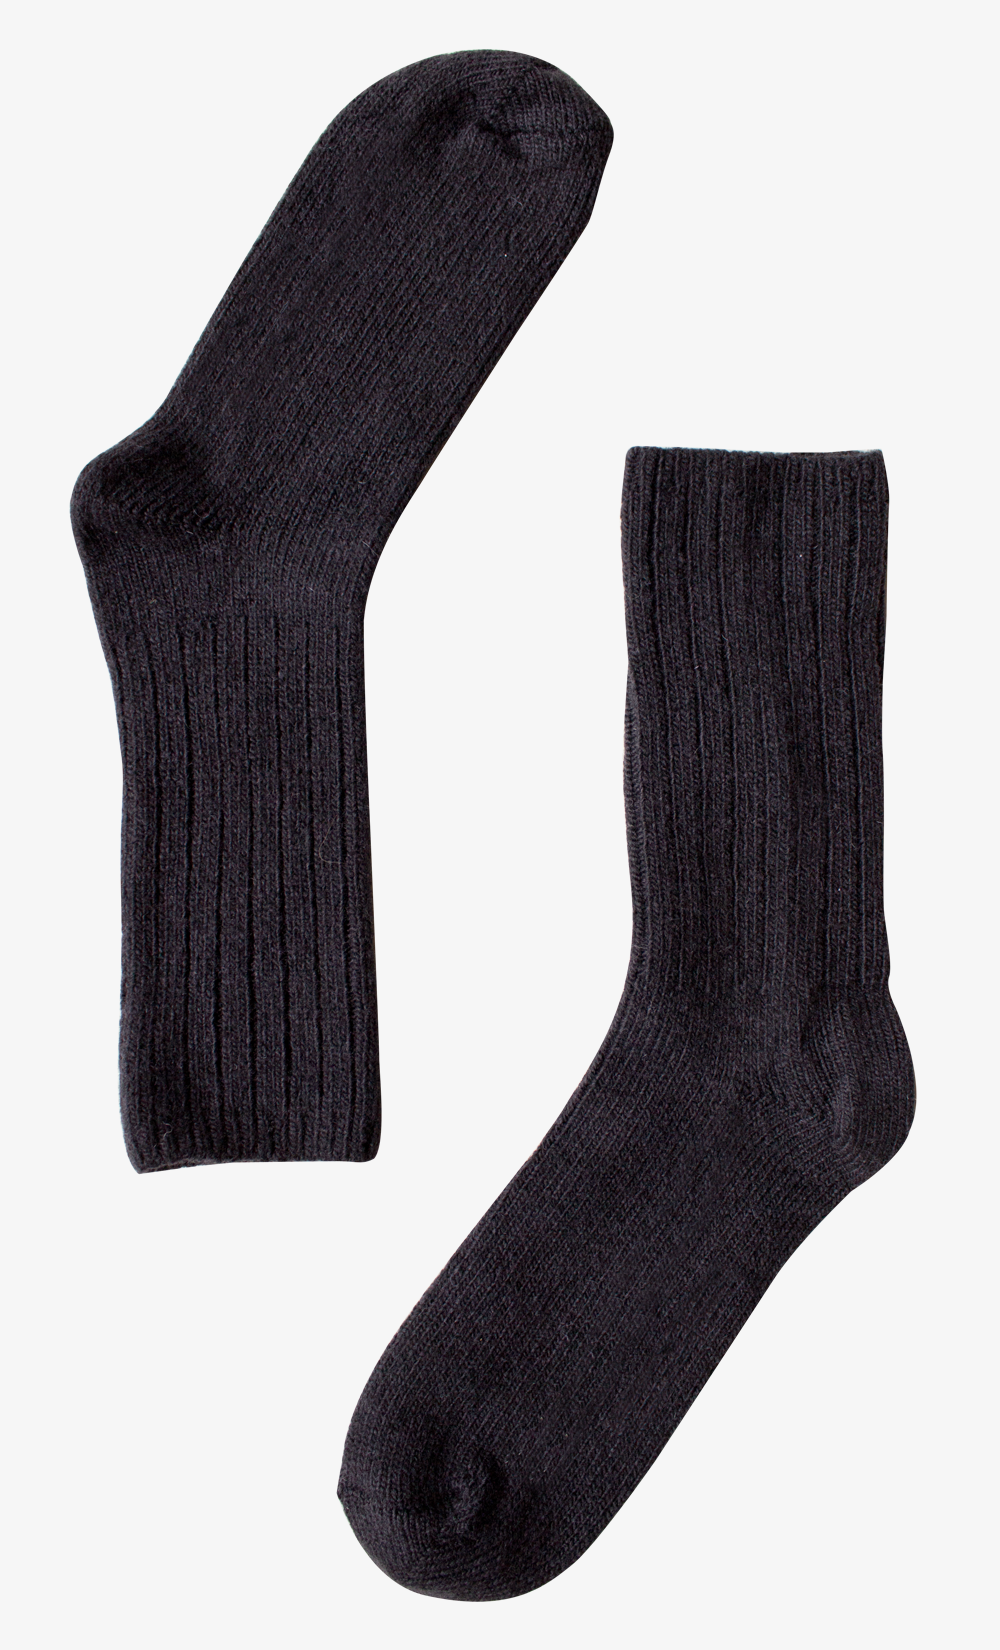 Lamb/Merino Wool Socks - Black - H